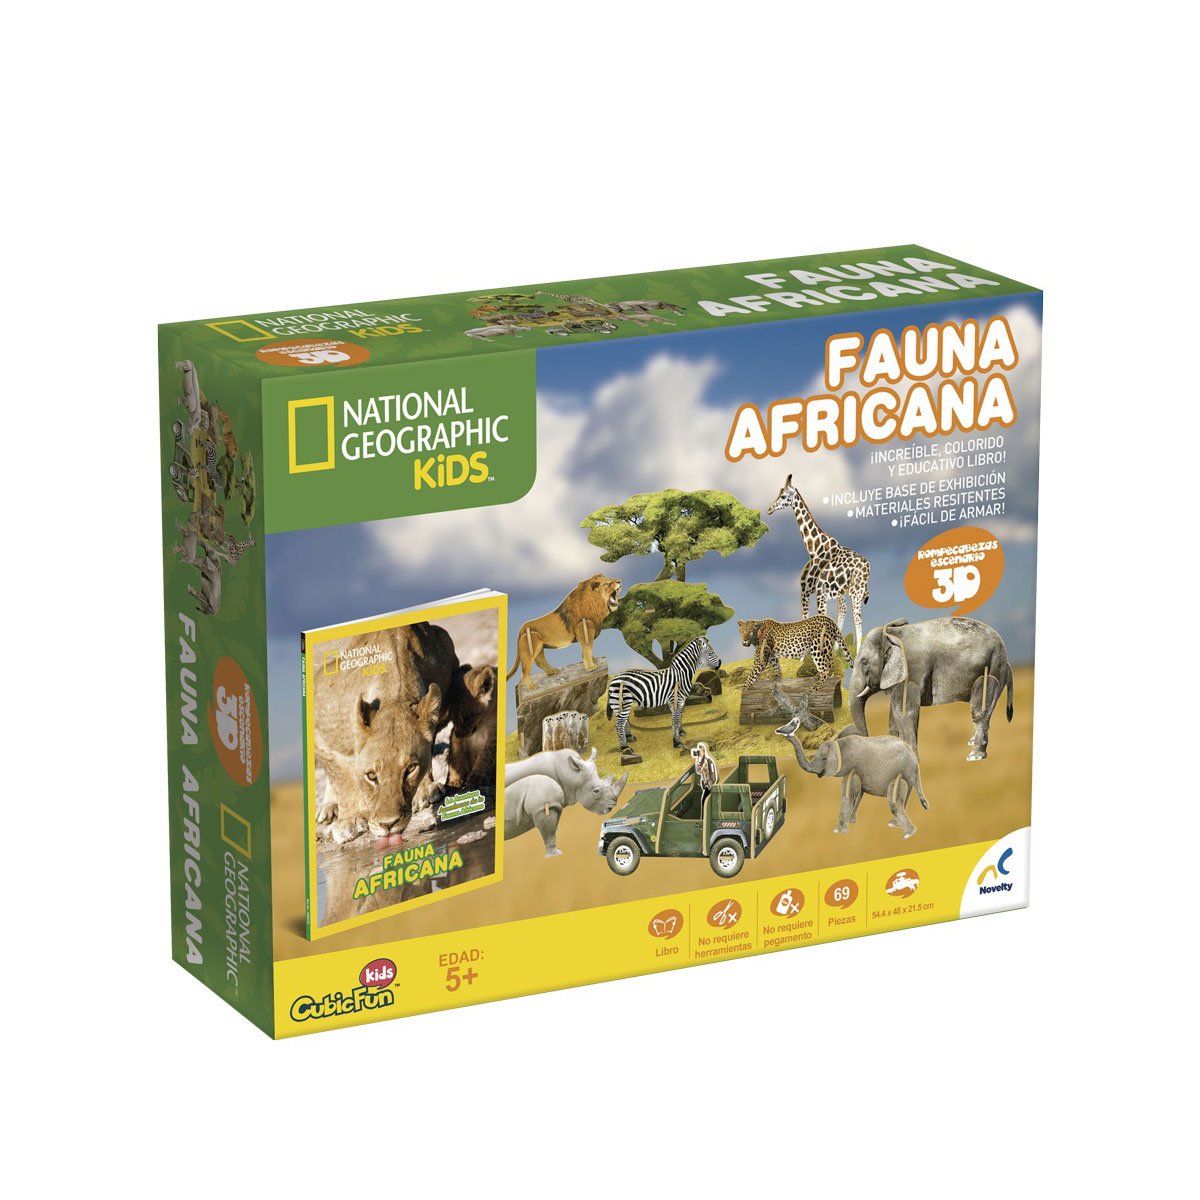 Fauna Africana Novelty Ediciones